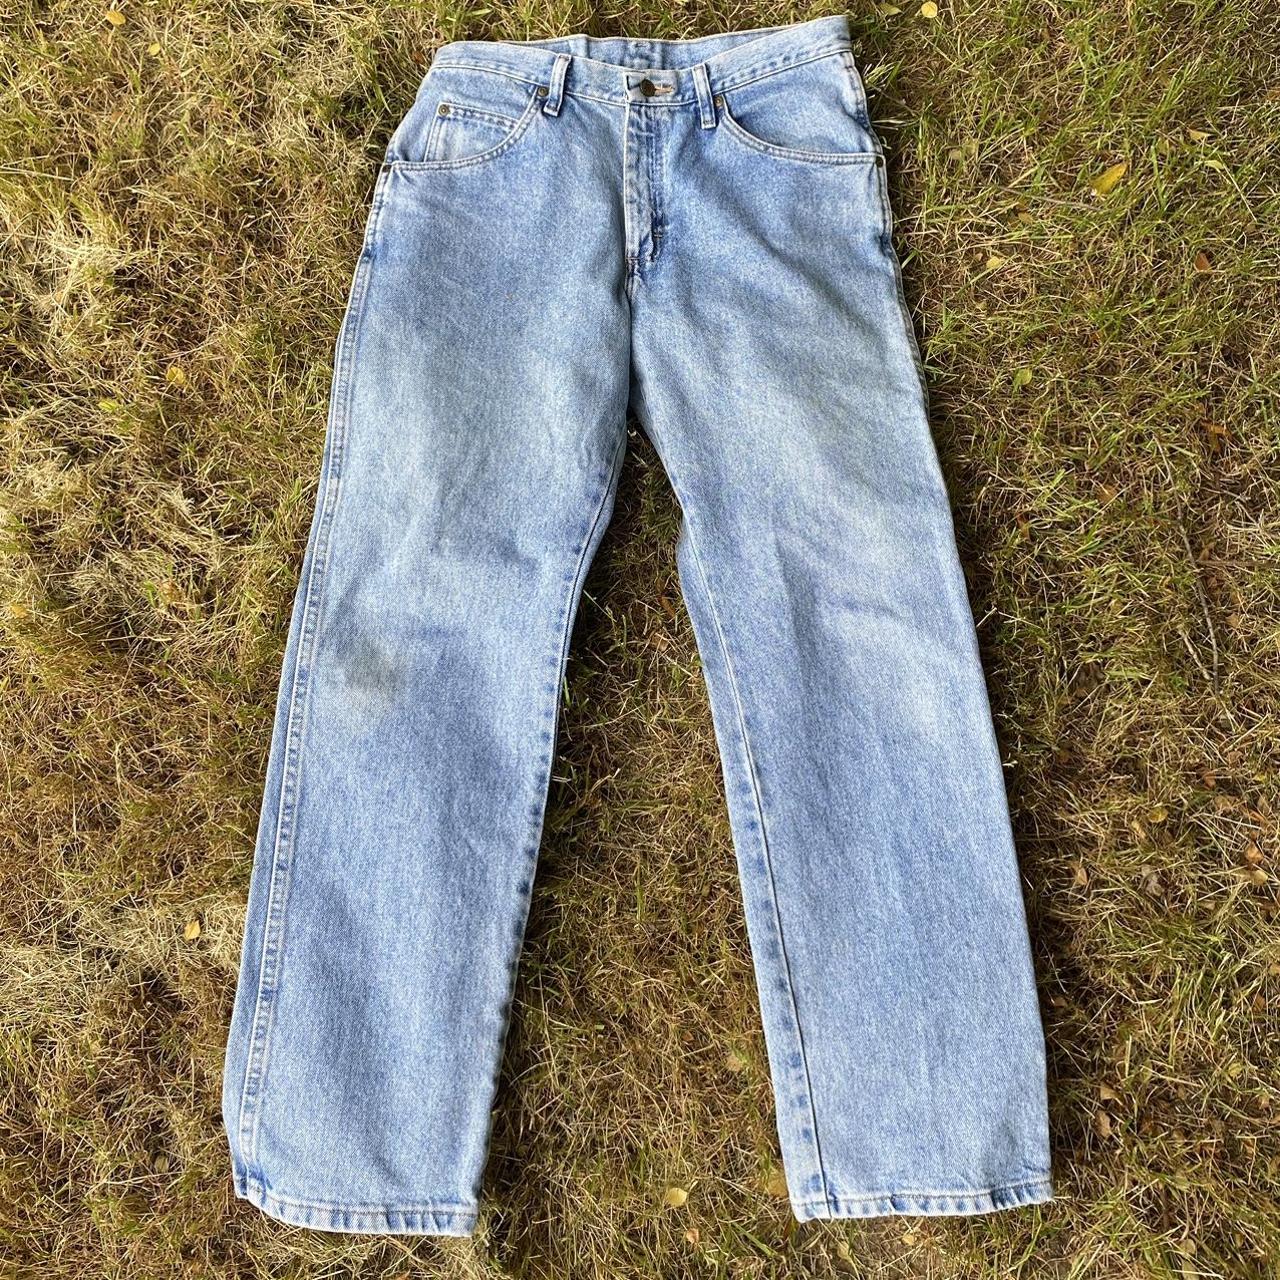 Beautiful Light Blue Wrangler Jeans Size 33x30 Depop 0009